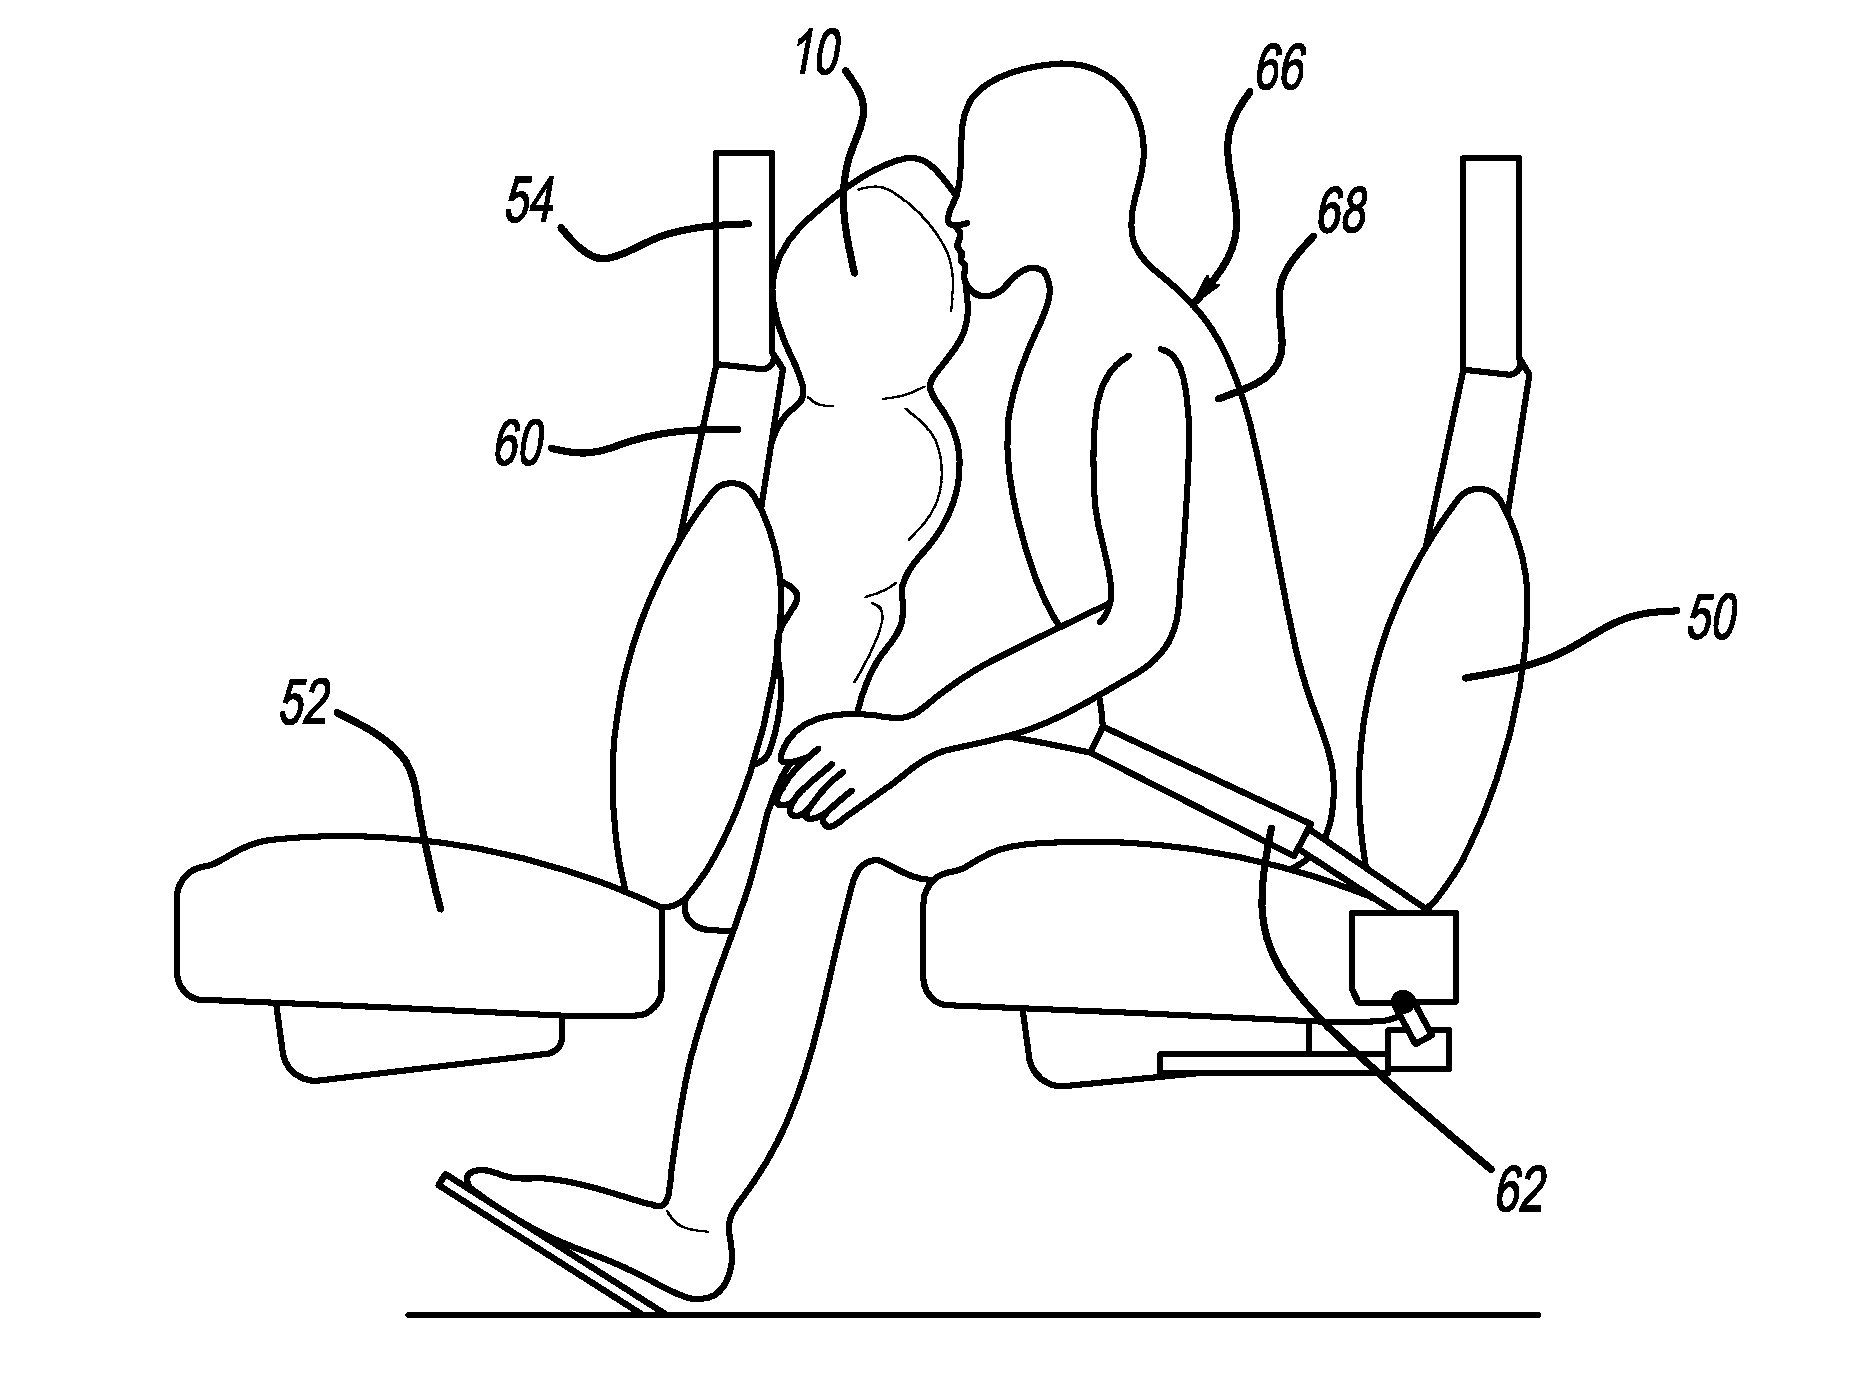 Airbag arrangement for seats arranged in tandem